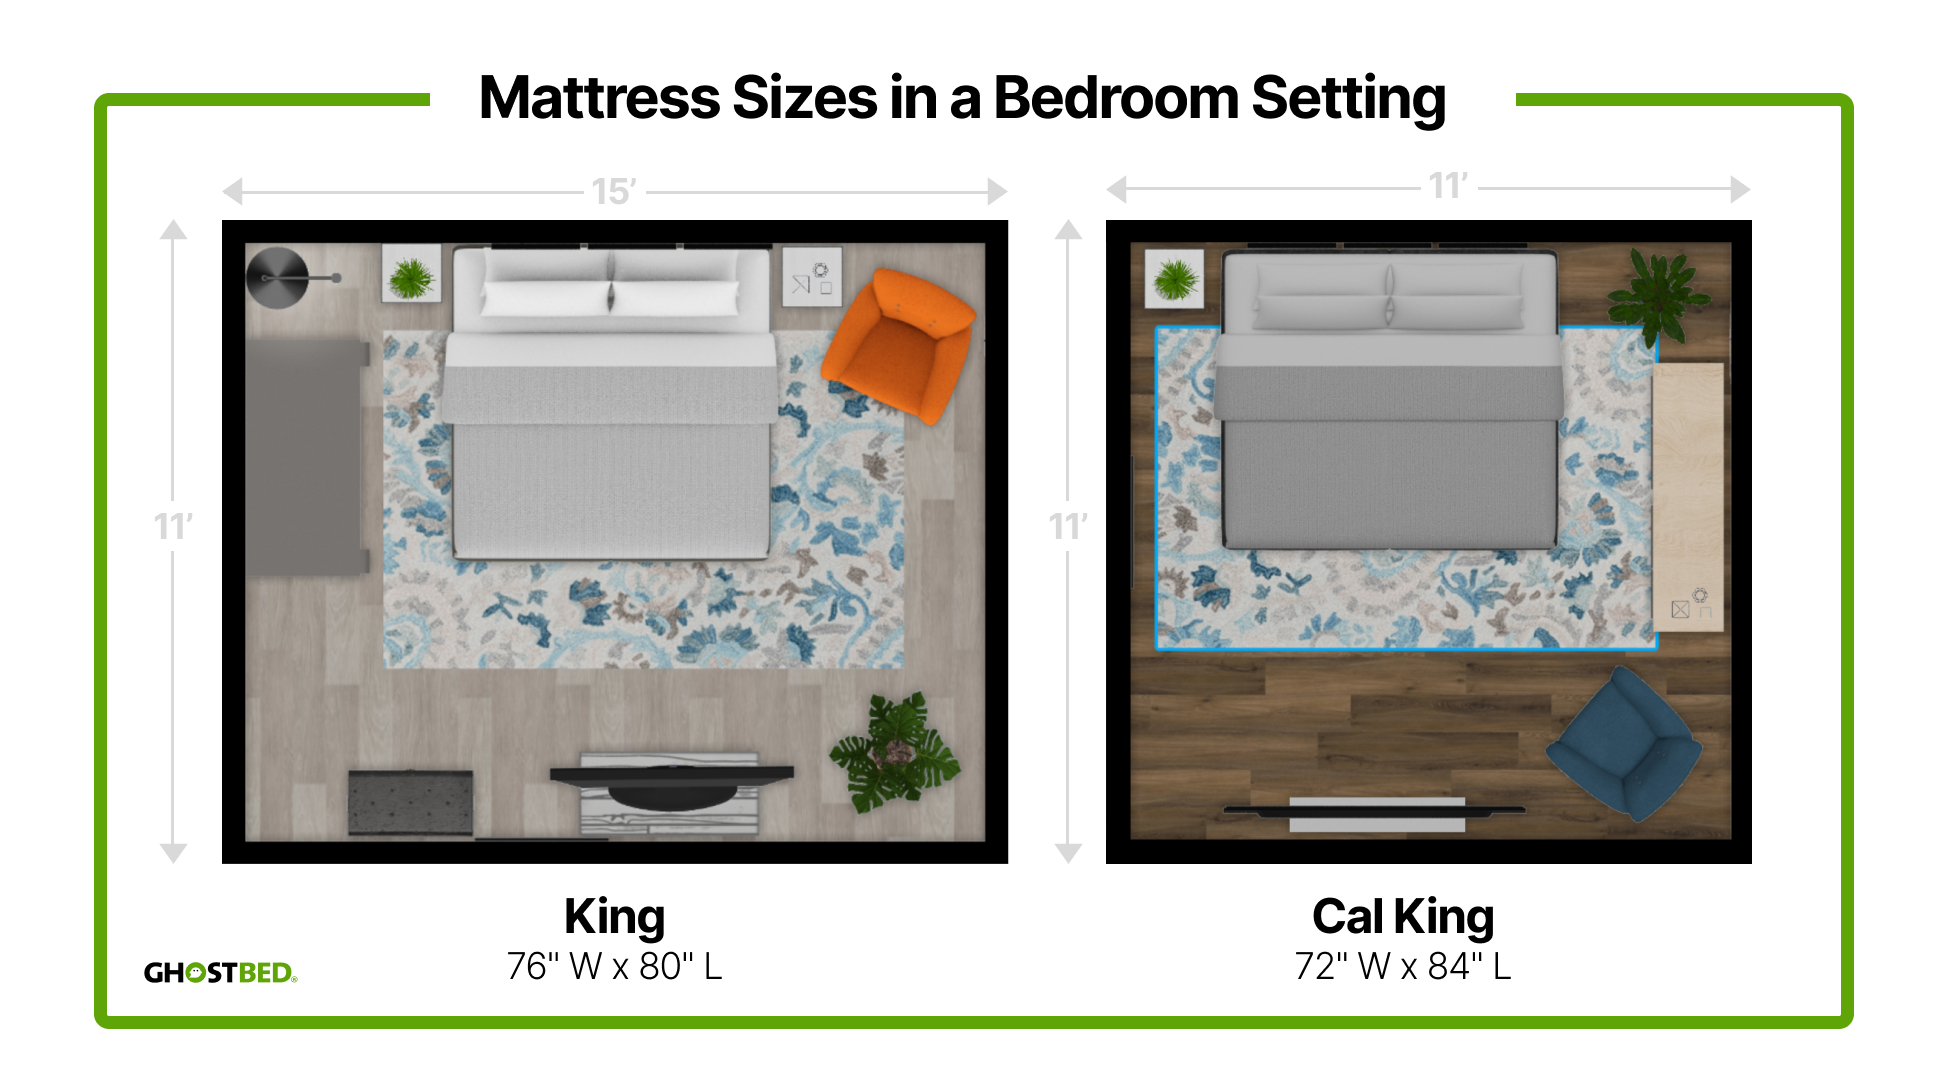 difference betwren wueen and cal king mattress